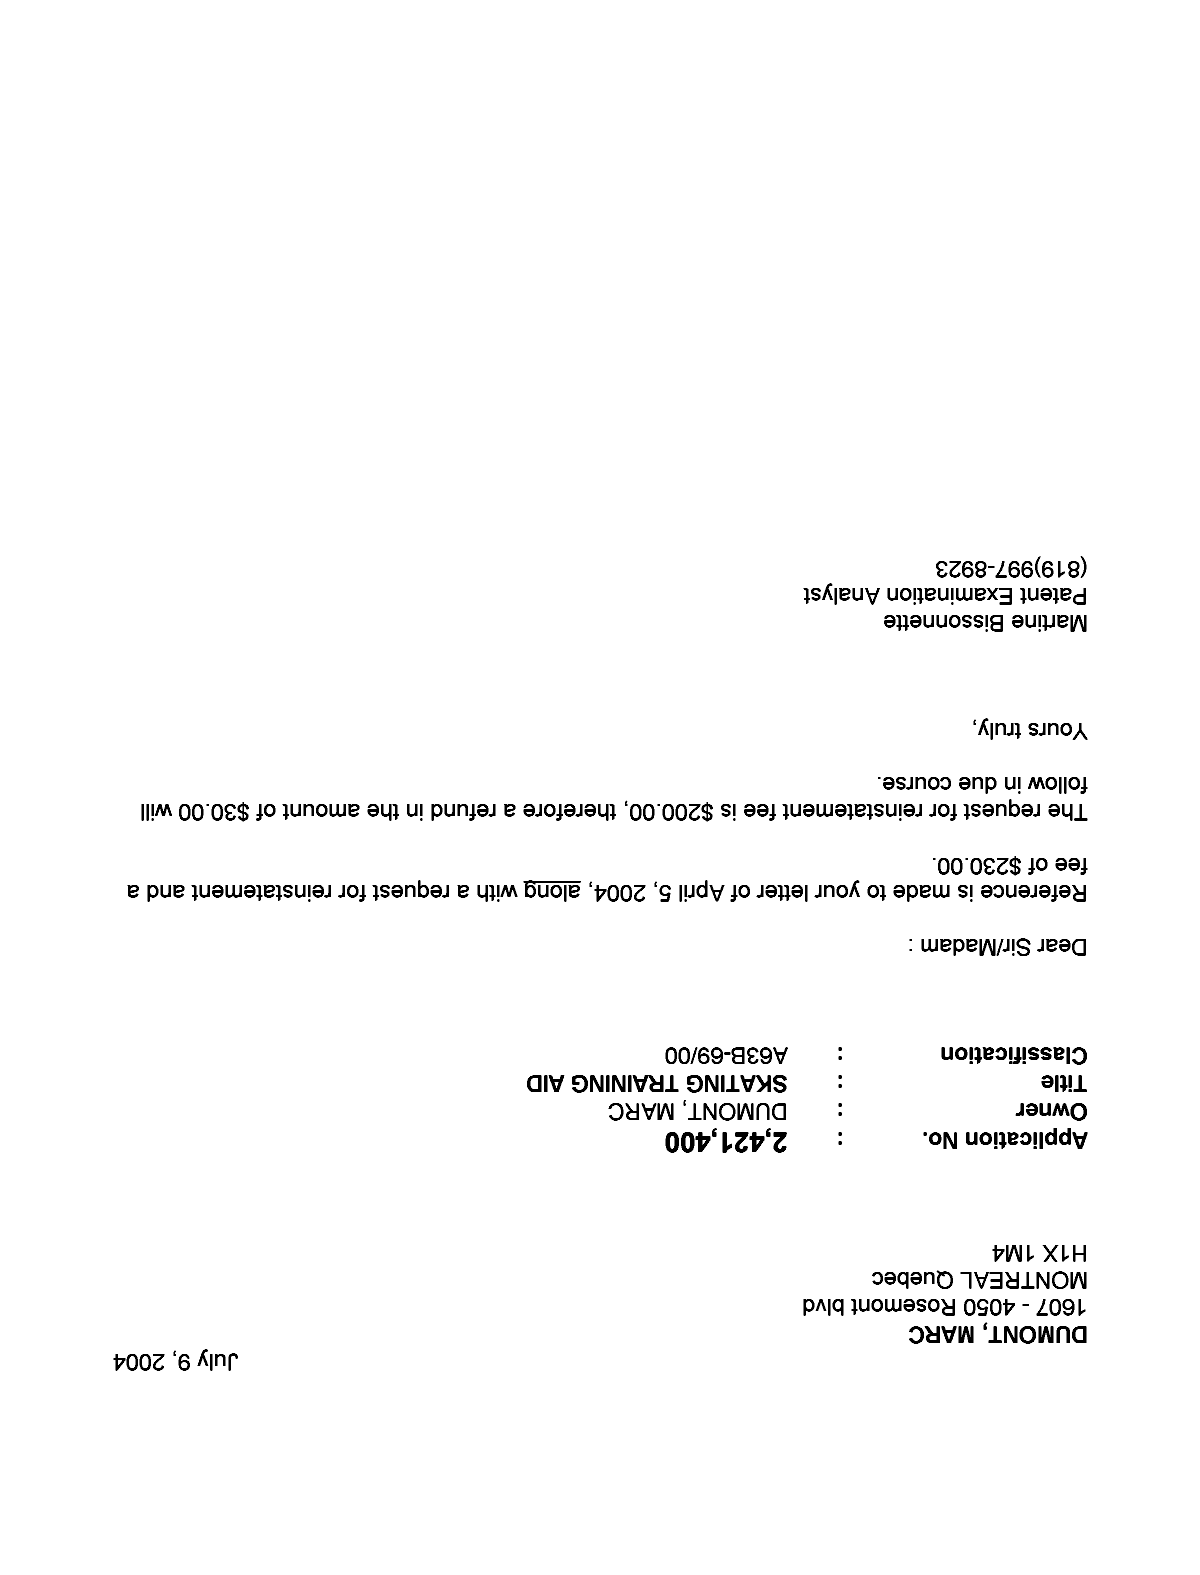 Canadian Patent Document 2421400. Correspondence 20031209. Image 1 of 1